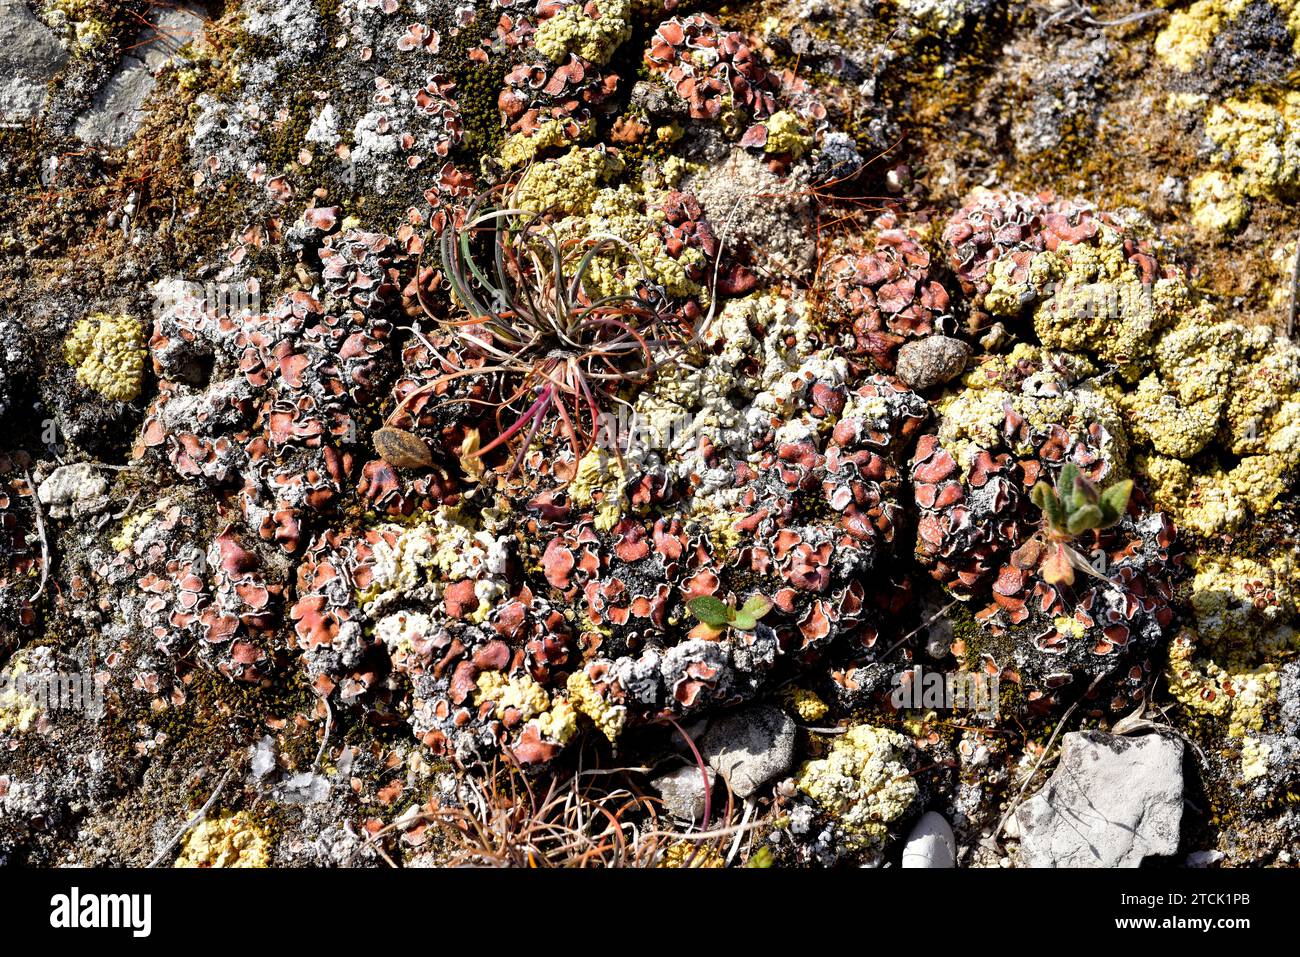 Psora decipiens squamulose brown-redish lichen and Fulgensia fulgida, yellow squamulose lichen growing on a gypsum soil. This photo was taken in Bellm Stock Photo